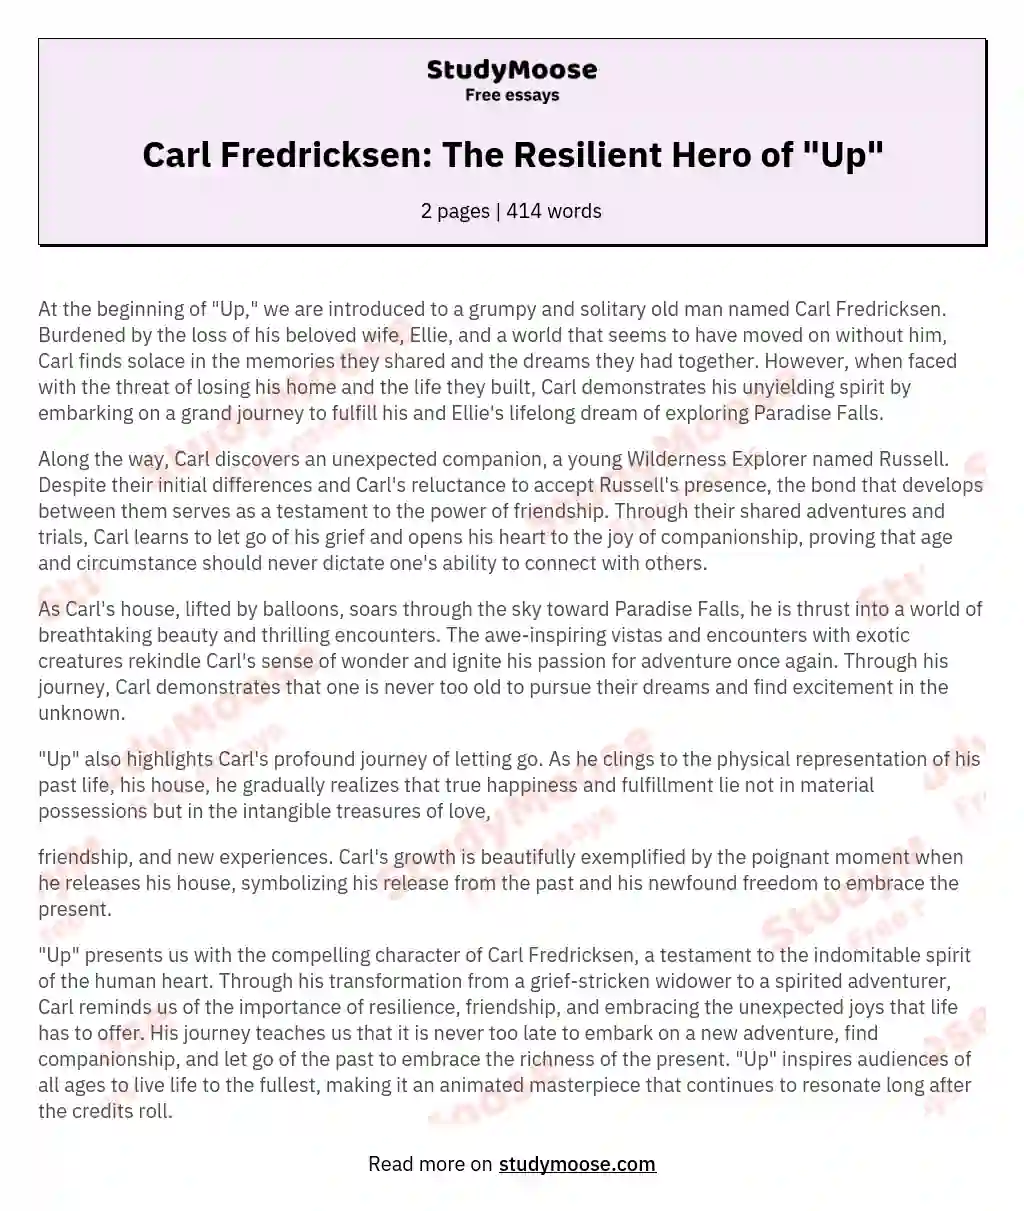 Carl Fredricksen: The Resilient Hero of "Up" essay